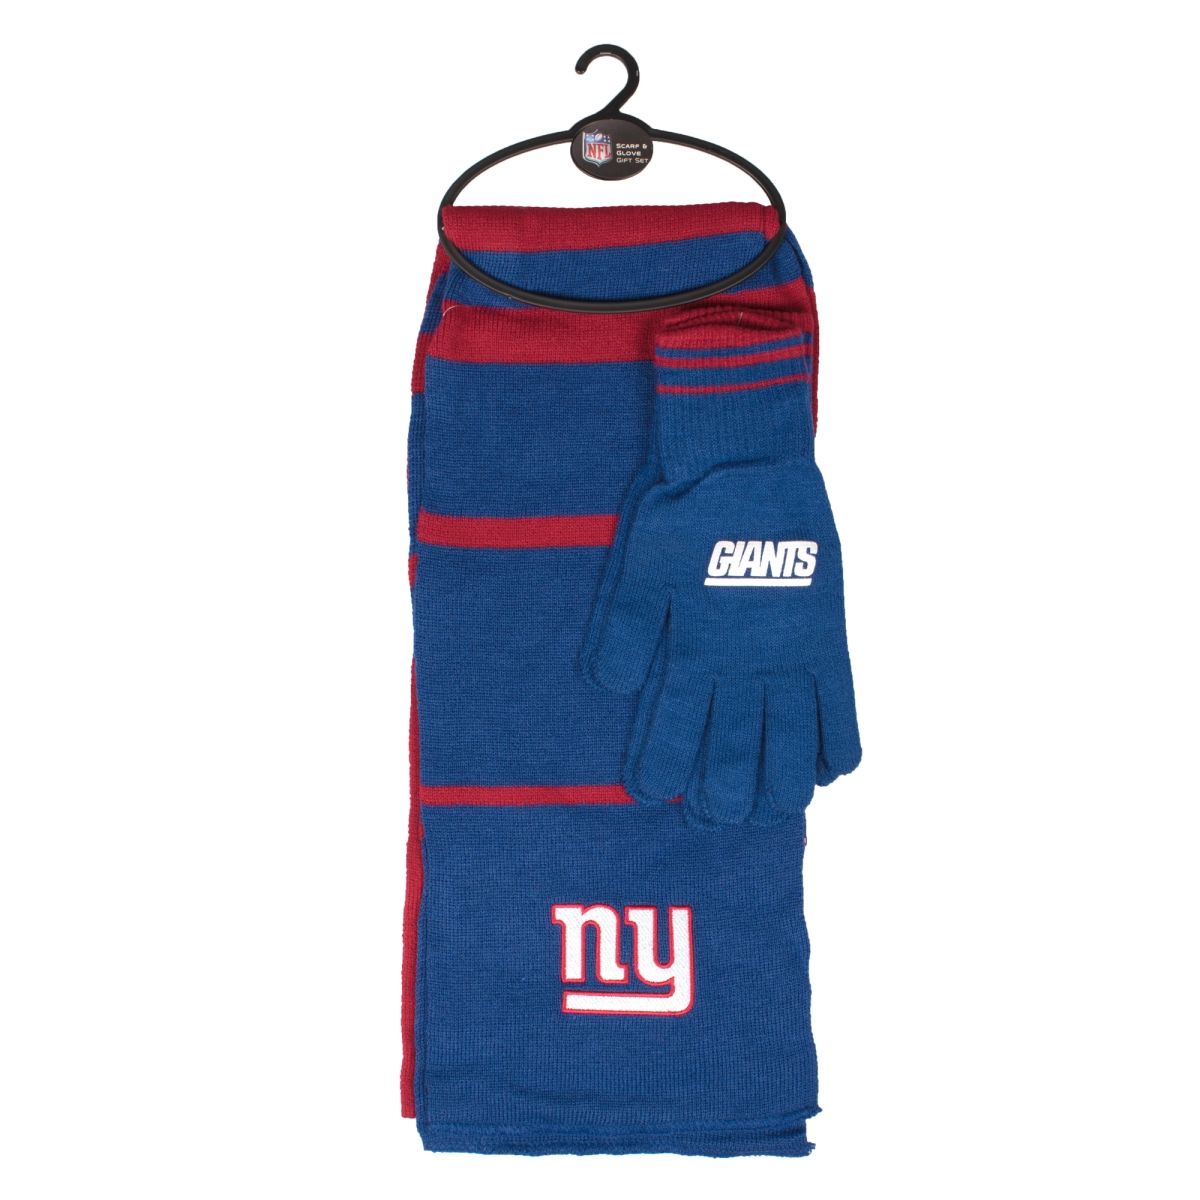 300657-gian Scarf Glove Gift Set Stripe - New York Giants